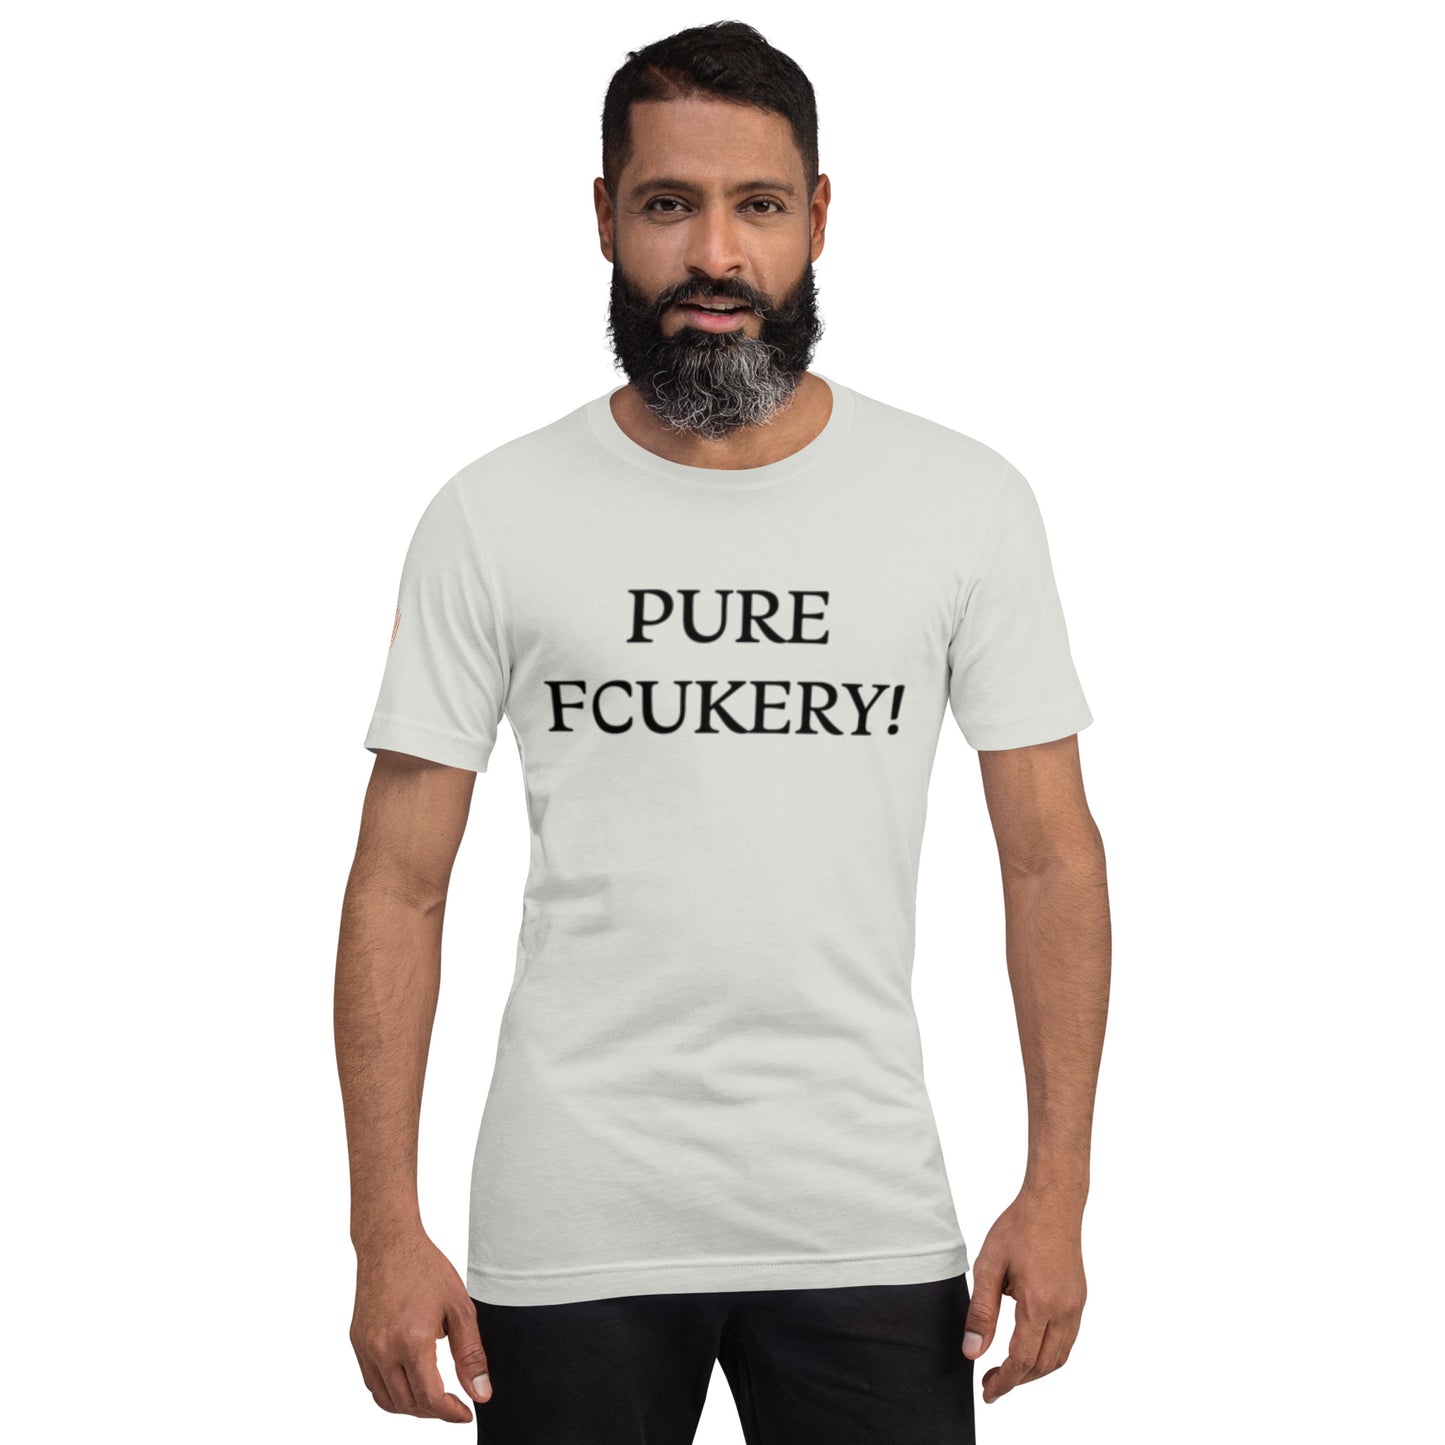 PURE FCUKERY! Unisex t-shirt